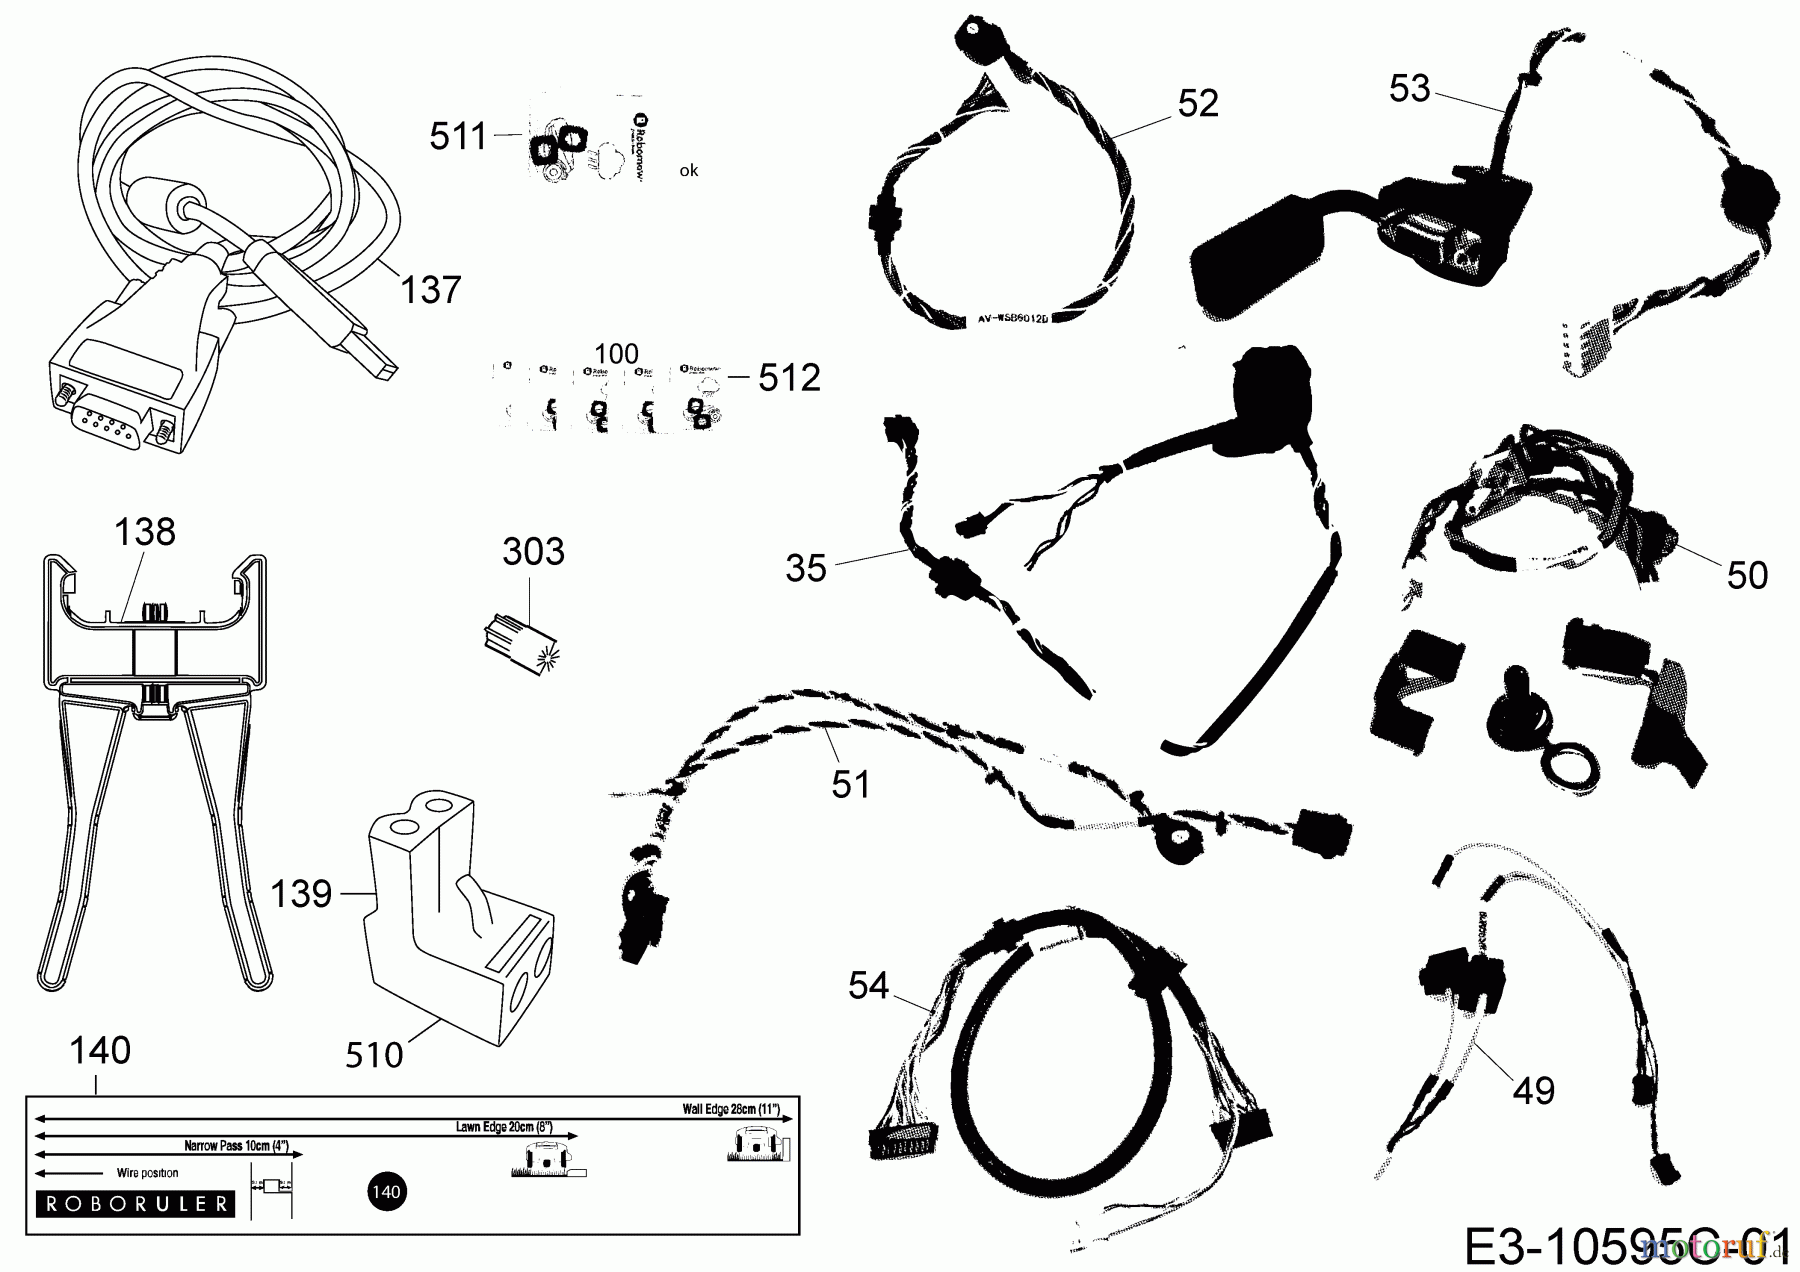  Robomow Mähroboter MS 1000 PRD6100Y1  (2015) Kabel, Kabelanschluß, Regensensor, Werkzeug